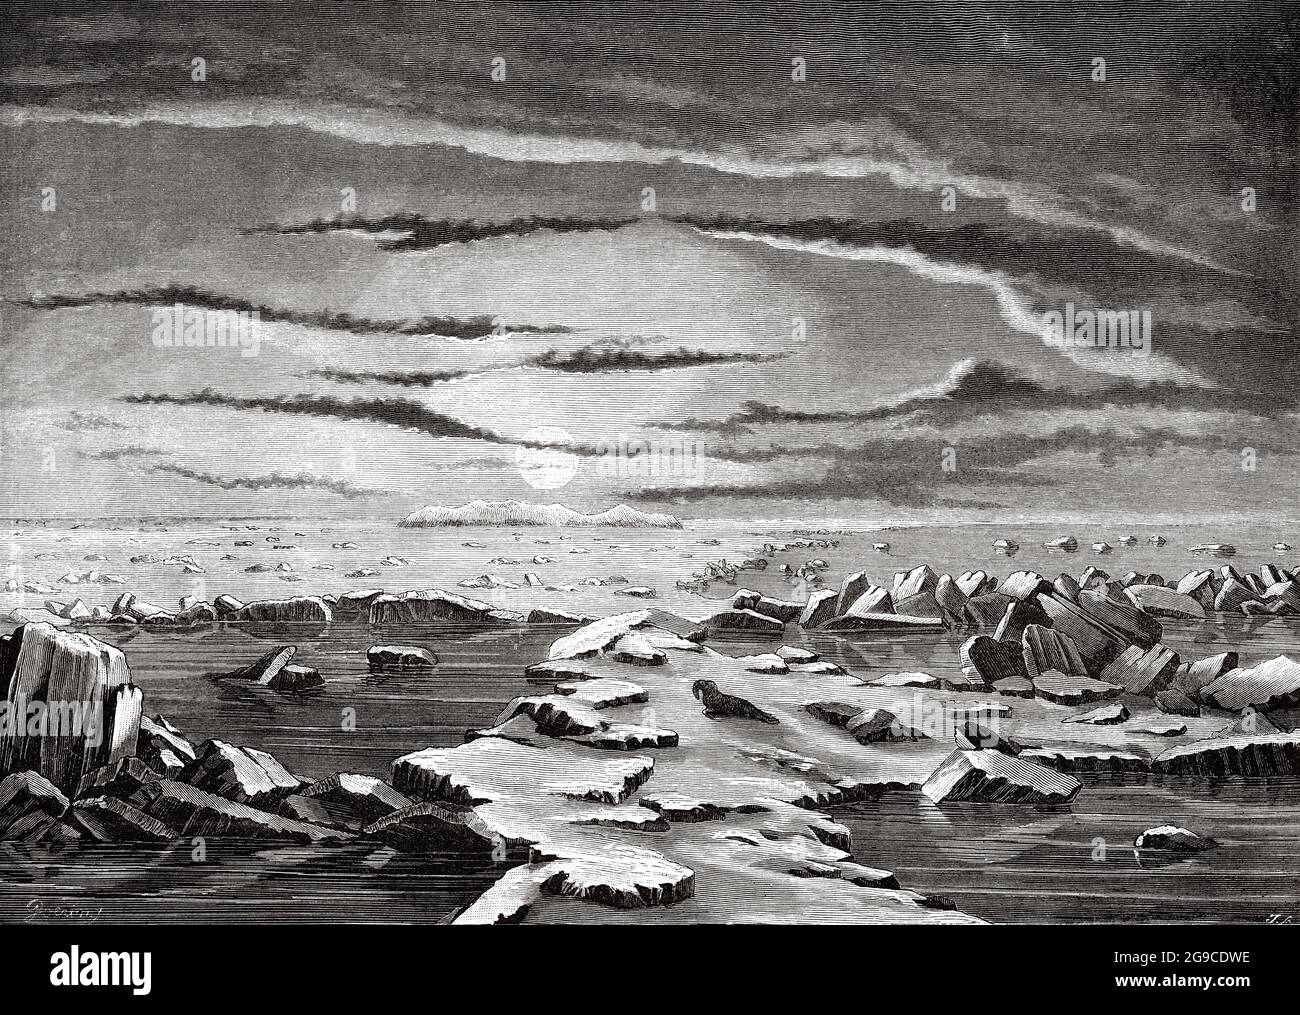 Frierende Beringstraße. Alaska. USA, Alt19. Jahrhundert gravierte Illustration von El Mundo Ilustrado 1879 Stockfoto